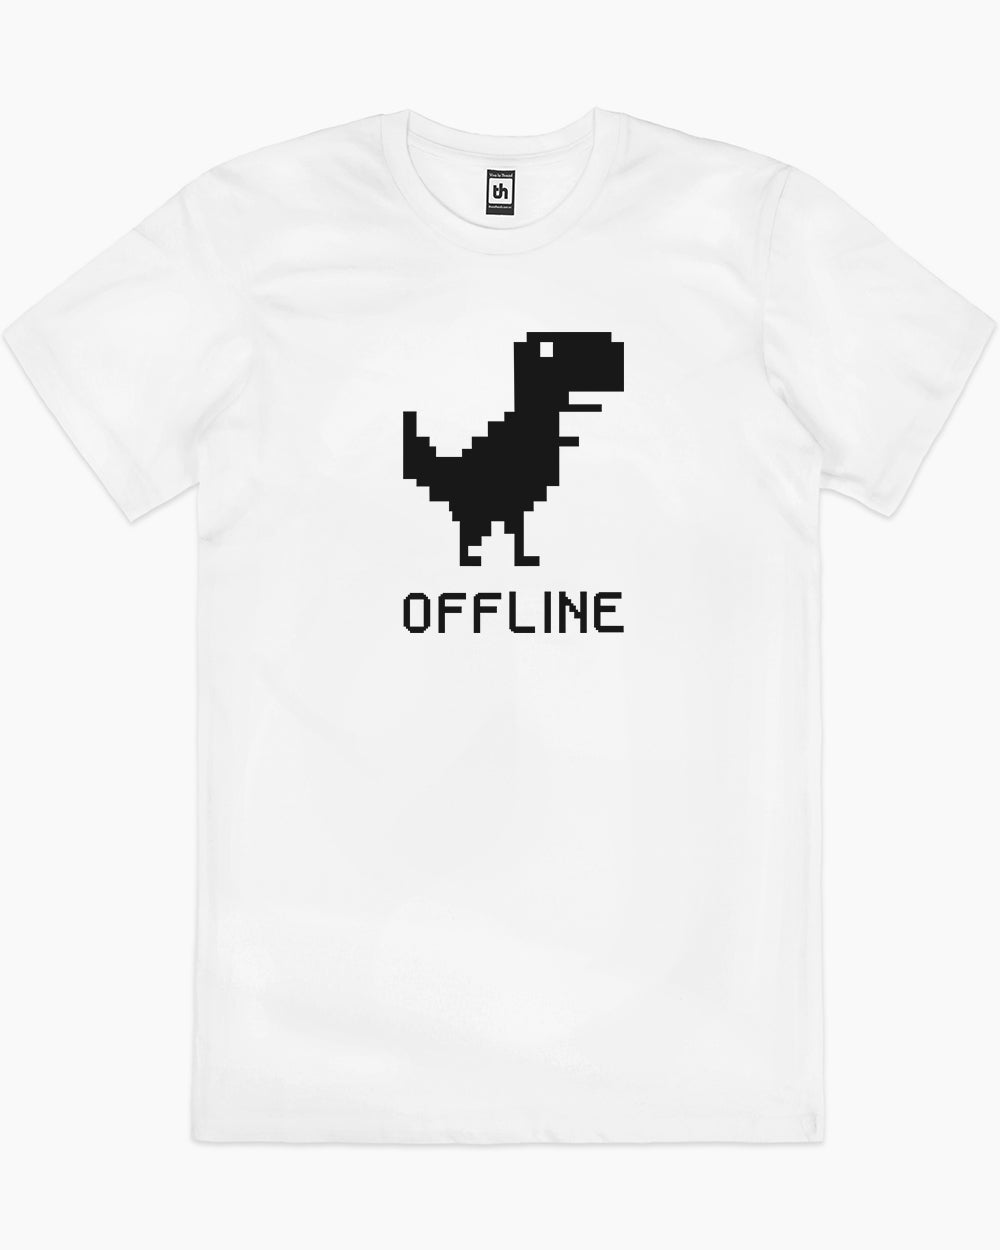 Offline T-Shirt, Graphic T-Shirts